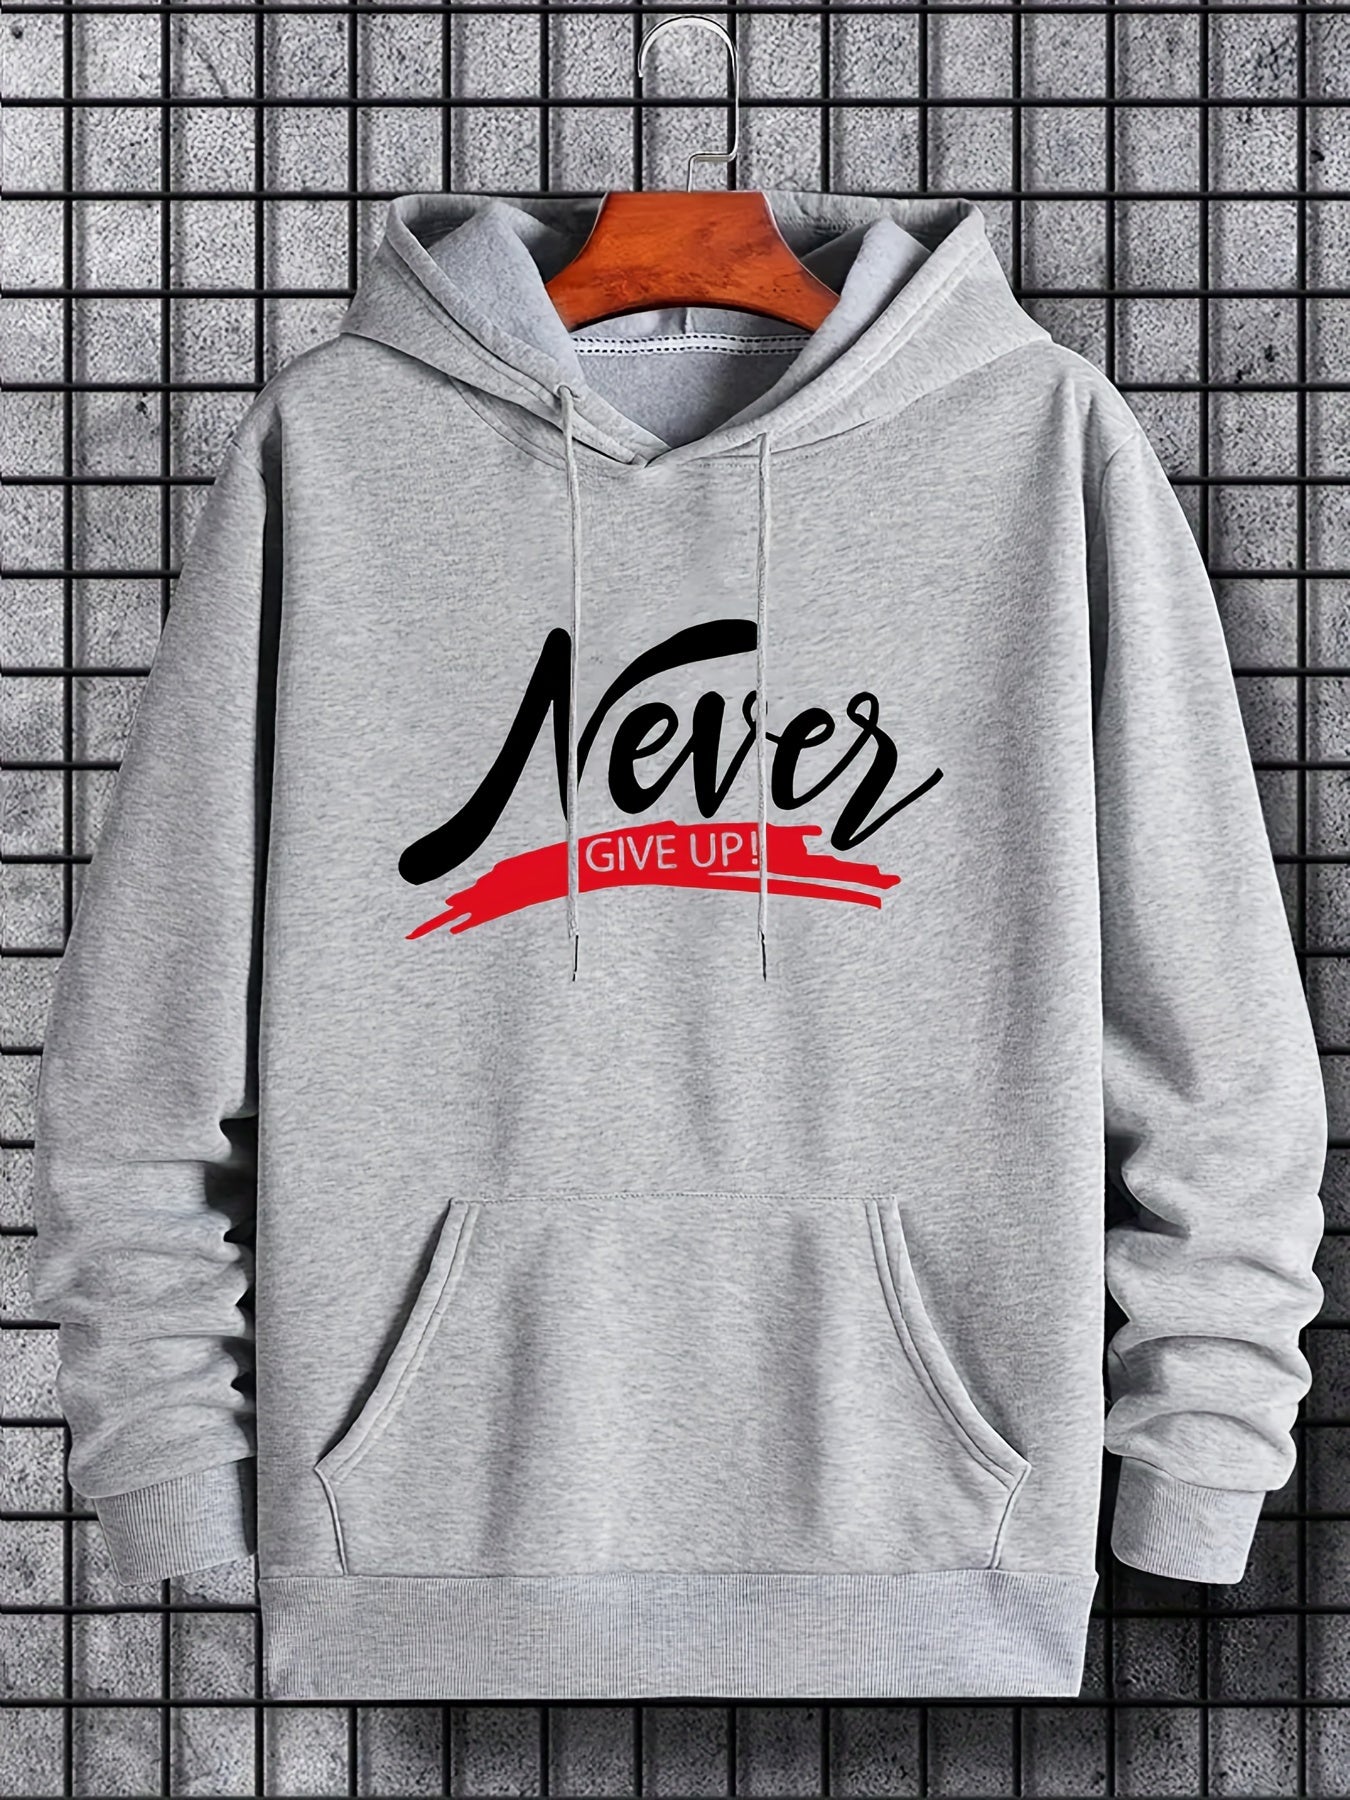 Never Give Up (2) Men’s Christian Pullover Hooded Sweatshirt claimedbygoddesigns